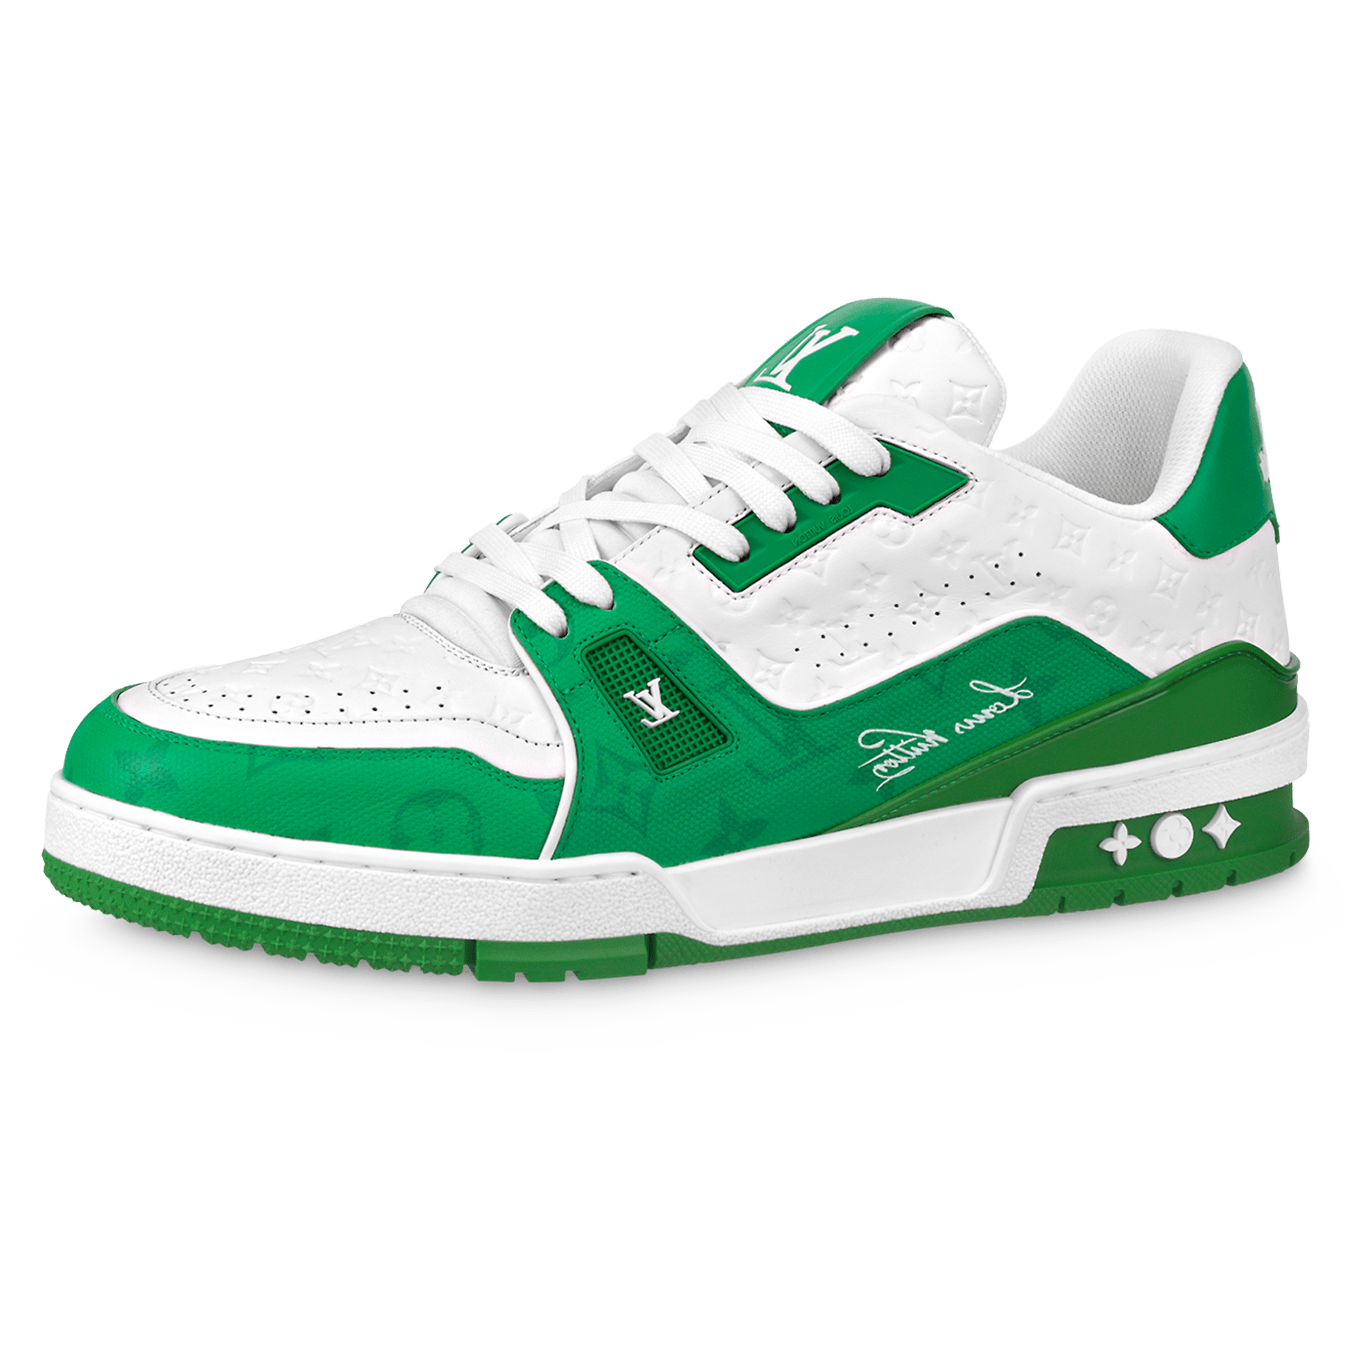 Louis Vuitton LV Trainer Sneaker Green. Size 05.5